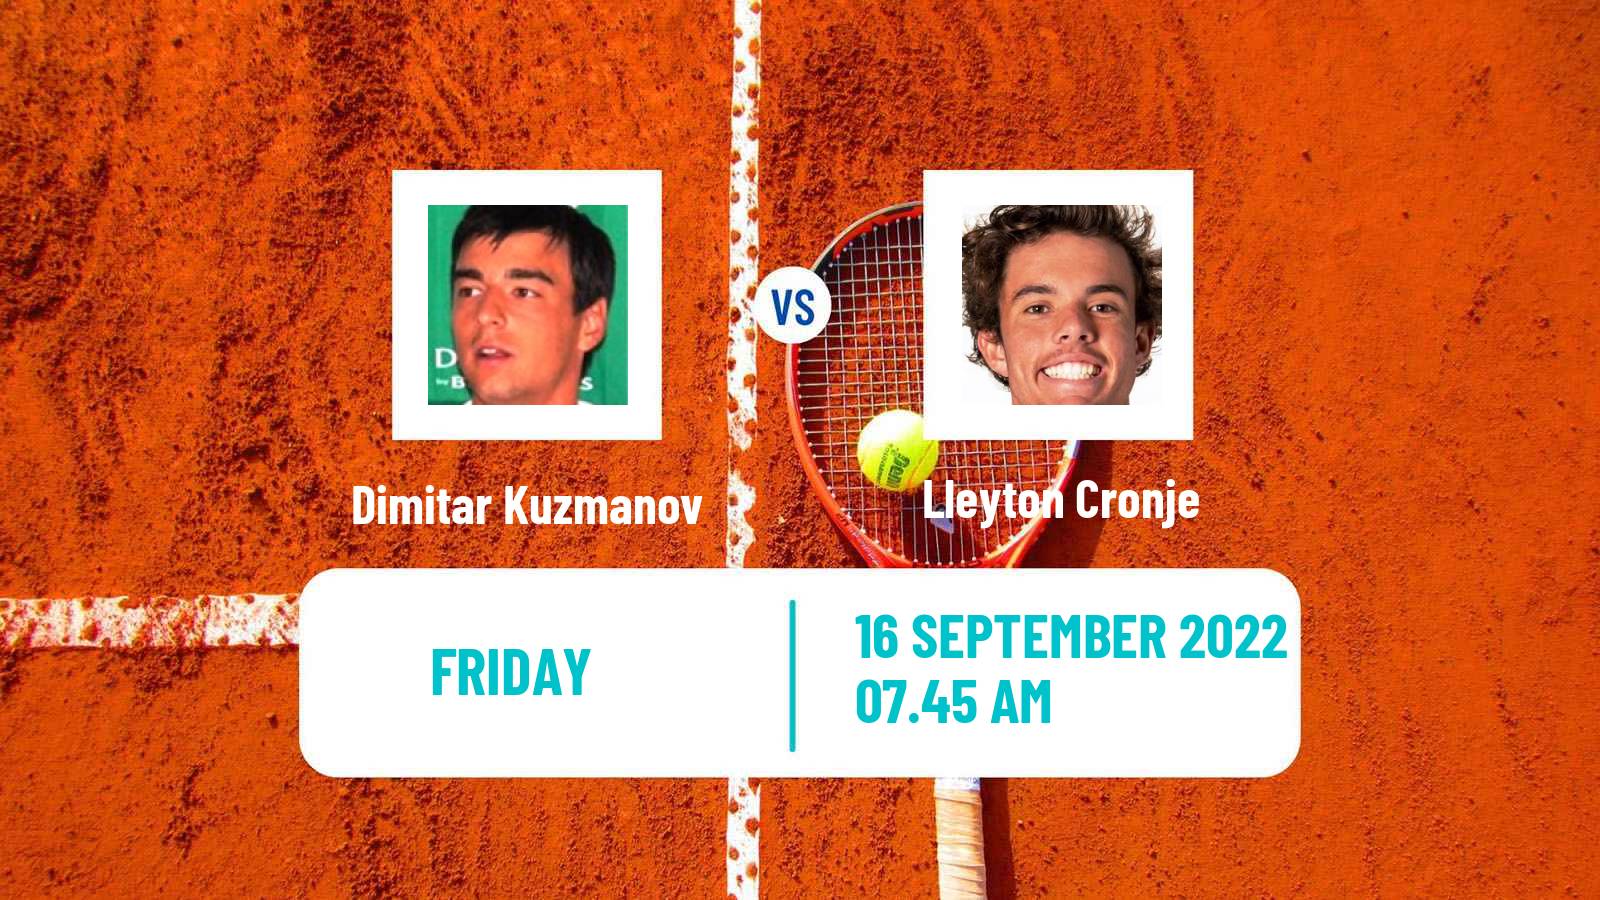 Tennis Davis Cup World Group II Dimitar Kuzmanov - Lleyton Cronje